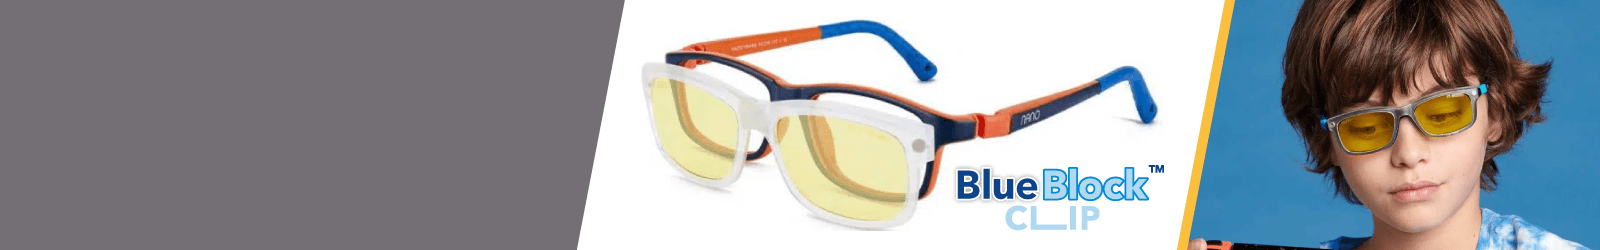 Transparent Nano Blue Block Clip Eyewear for Kids